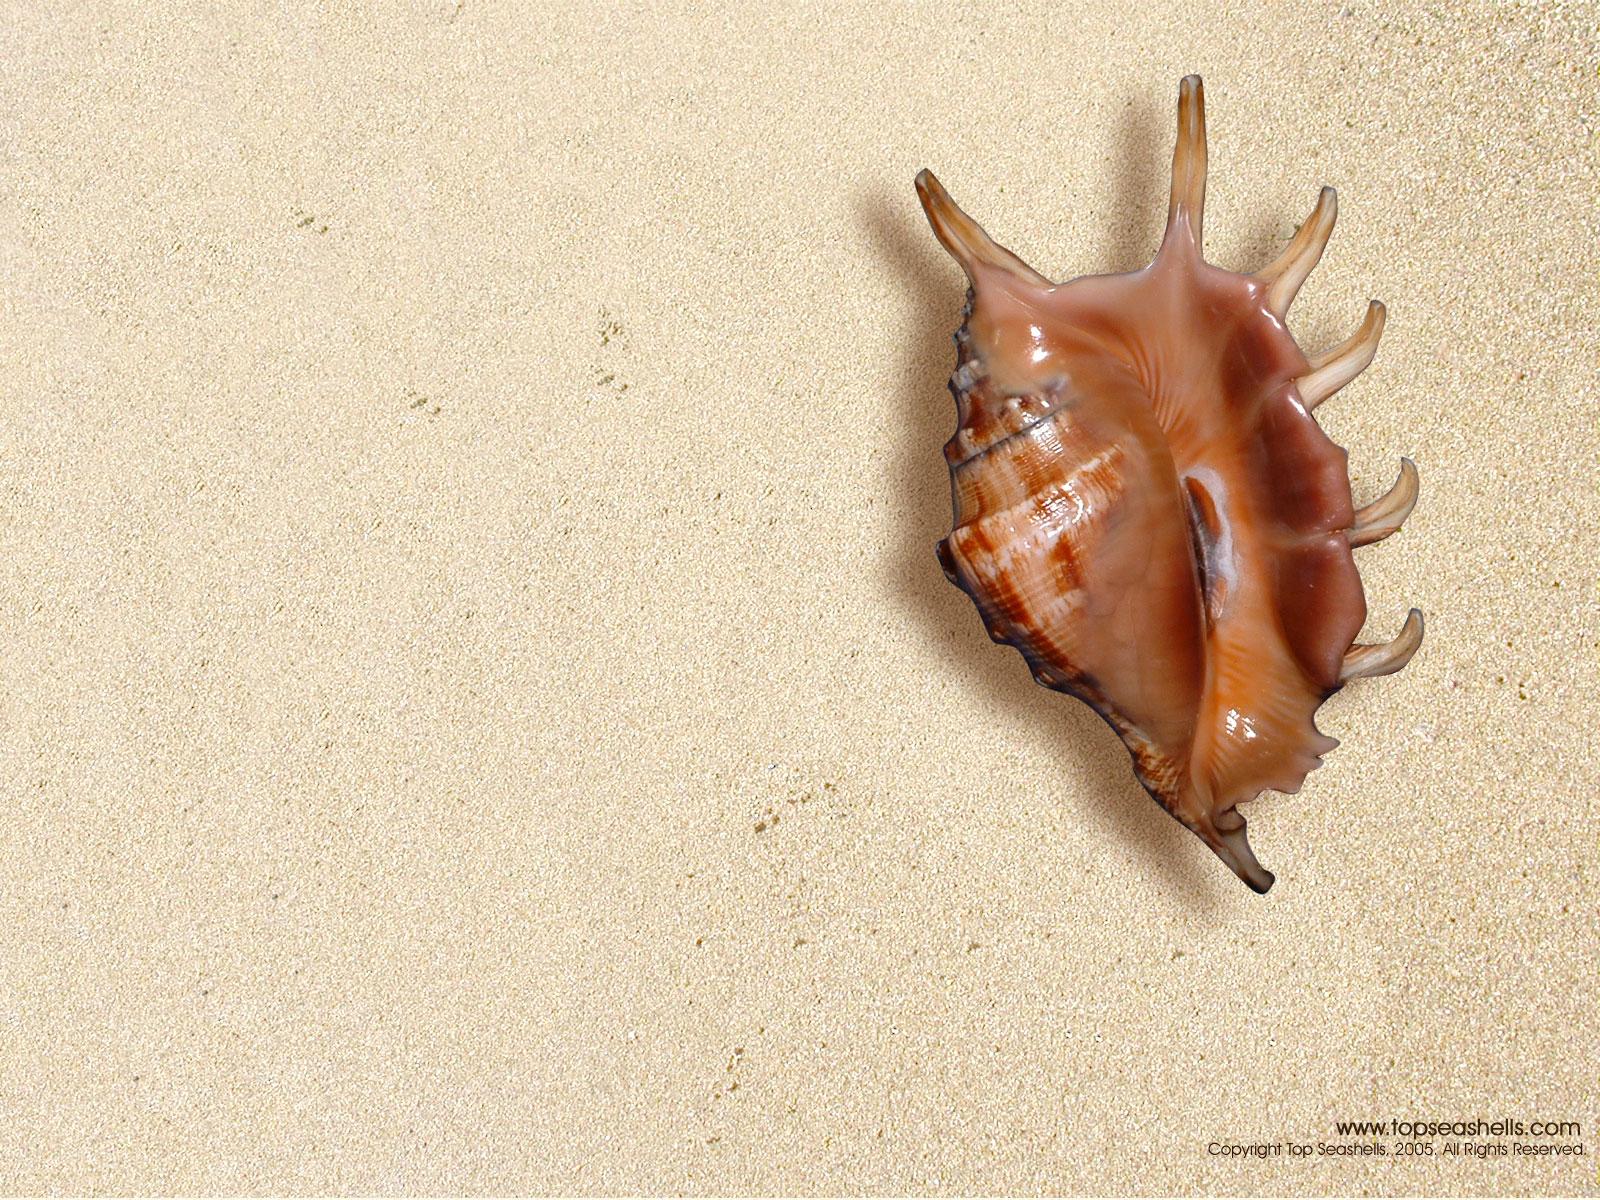 Sea Shell of Topseashells : Specimen Seashells for sale for your